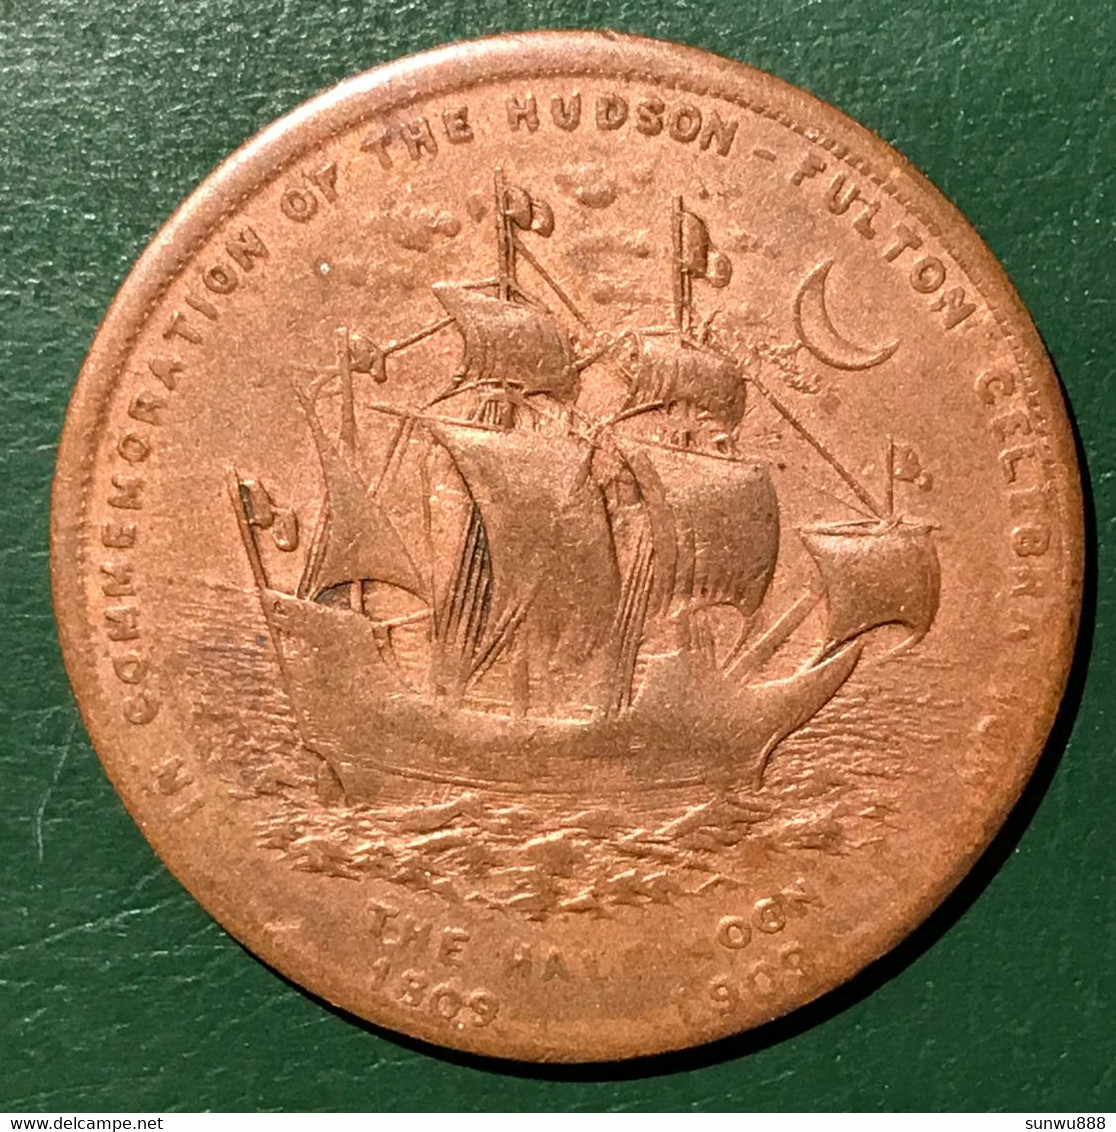 Hudson Fulton Celebration The Half Moon 1609-1909 New York Boat Medal Token RARE (fixed Price) - Firma's